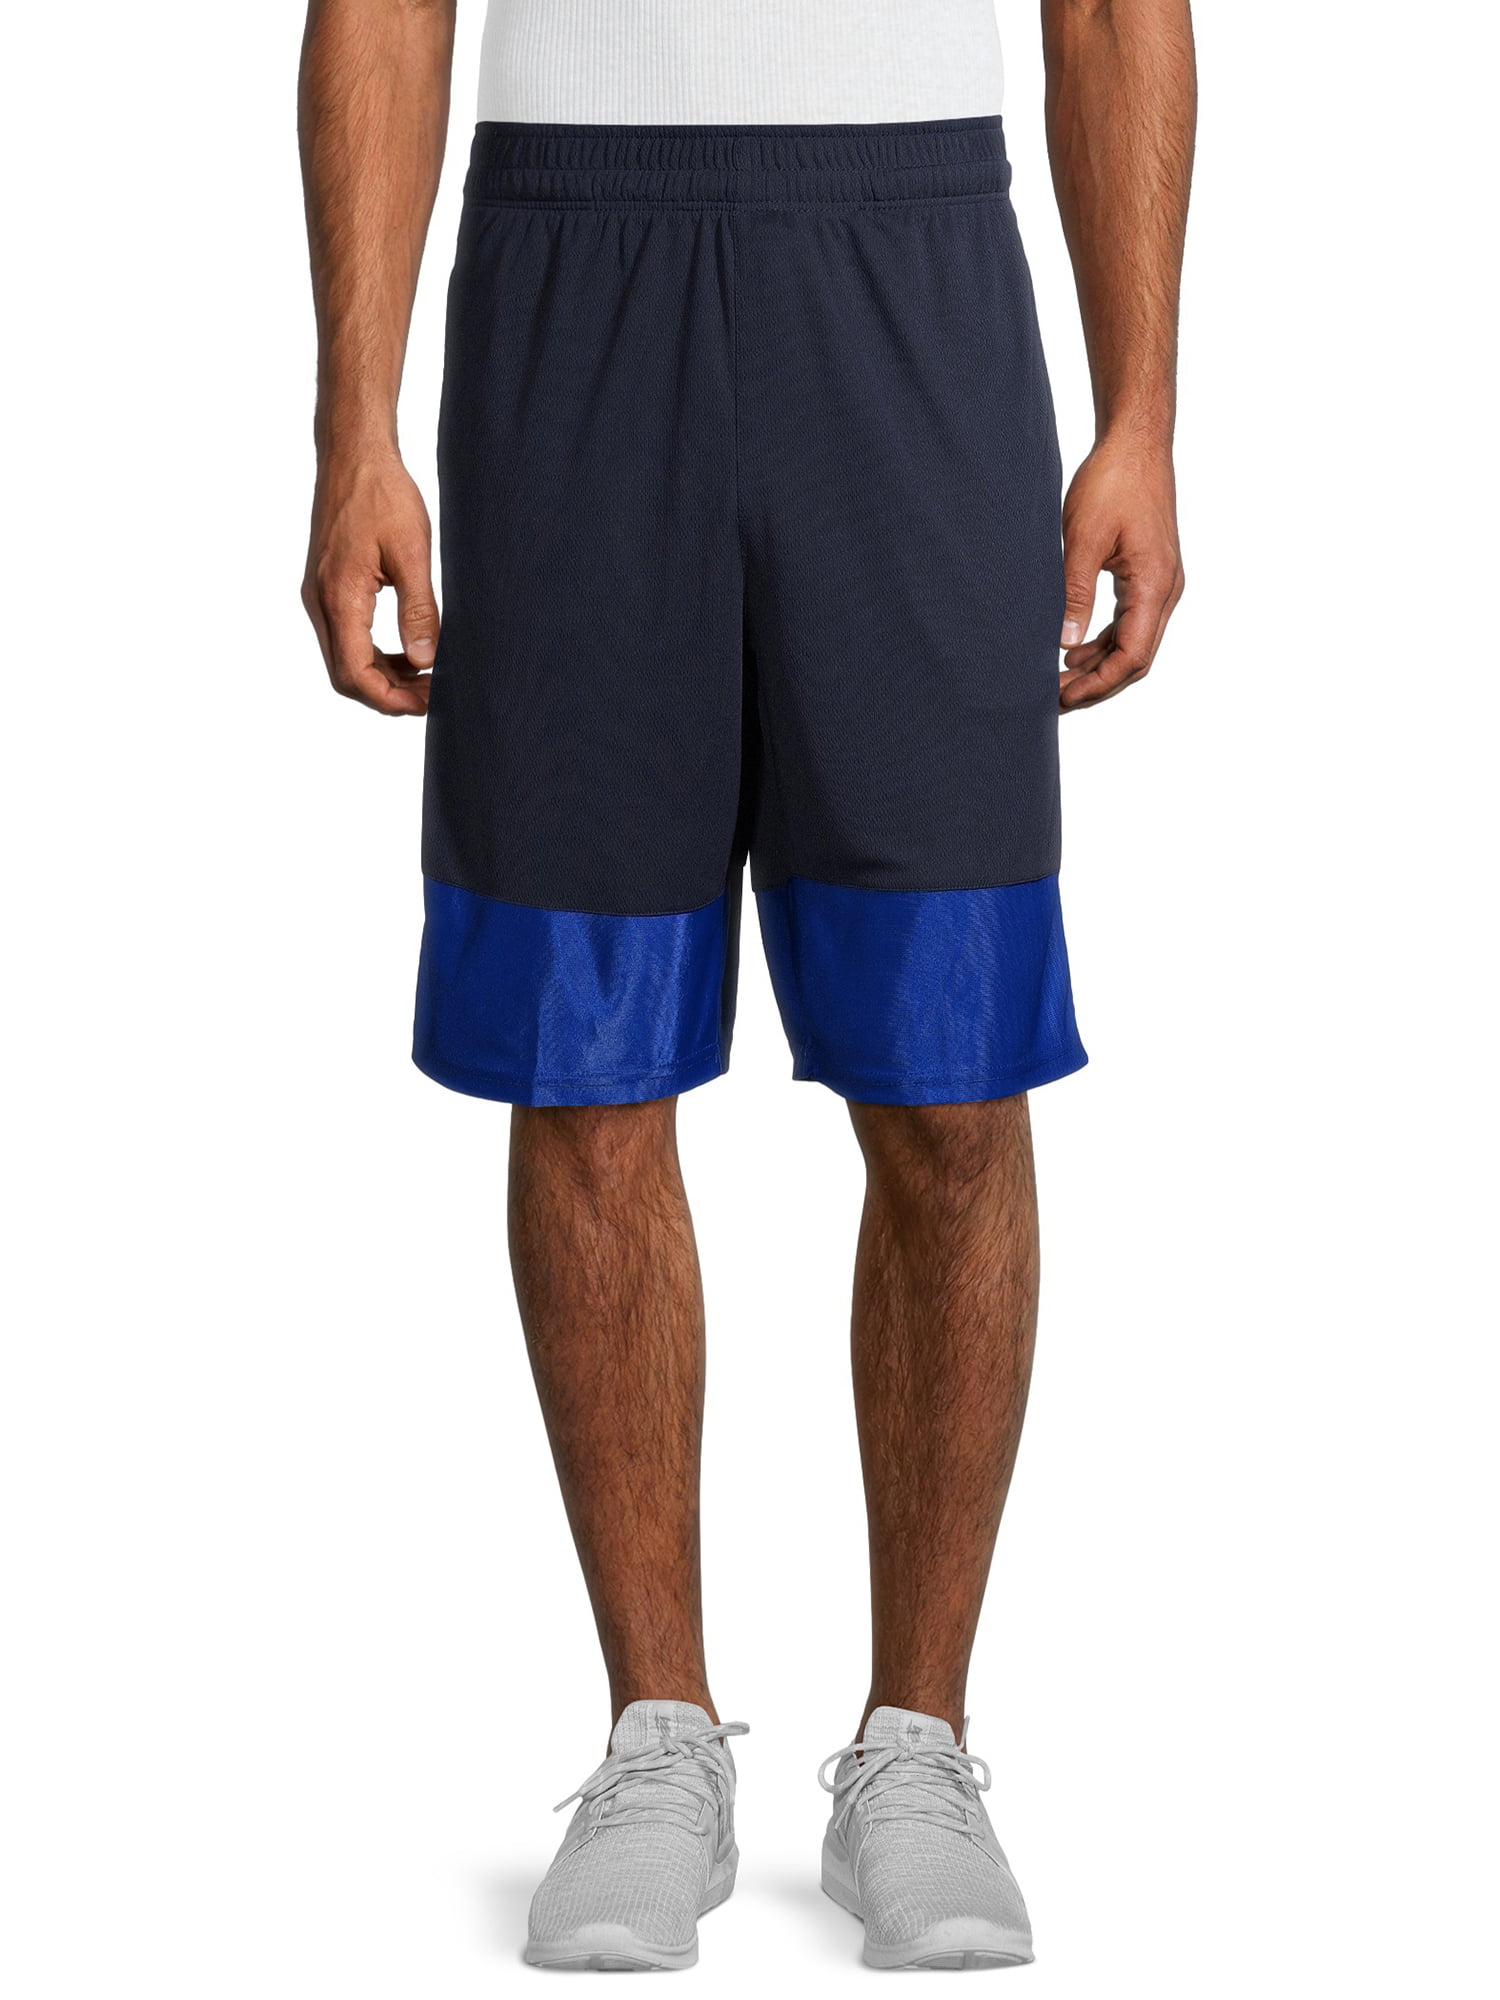 AL1VE Men's Side Striped Splinter Mesh Basketball Shorts - Walmart.com